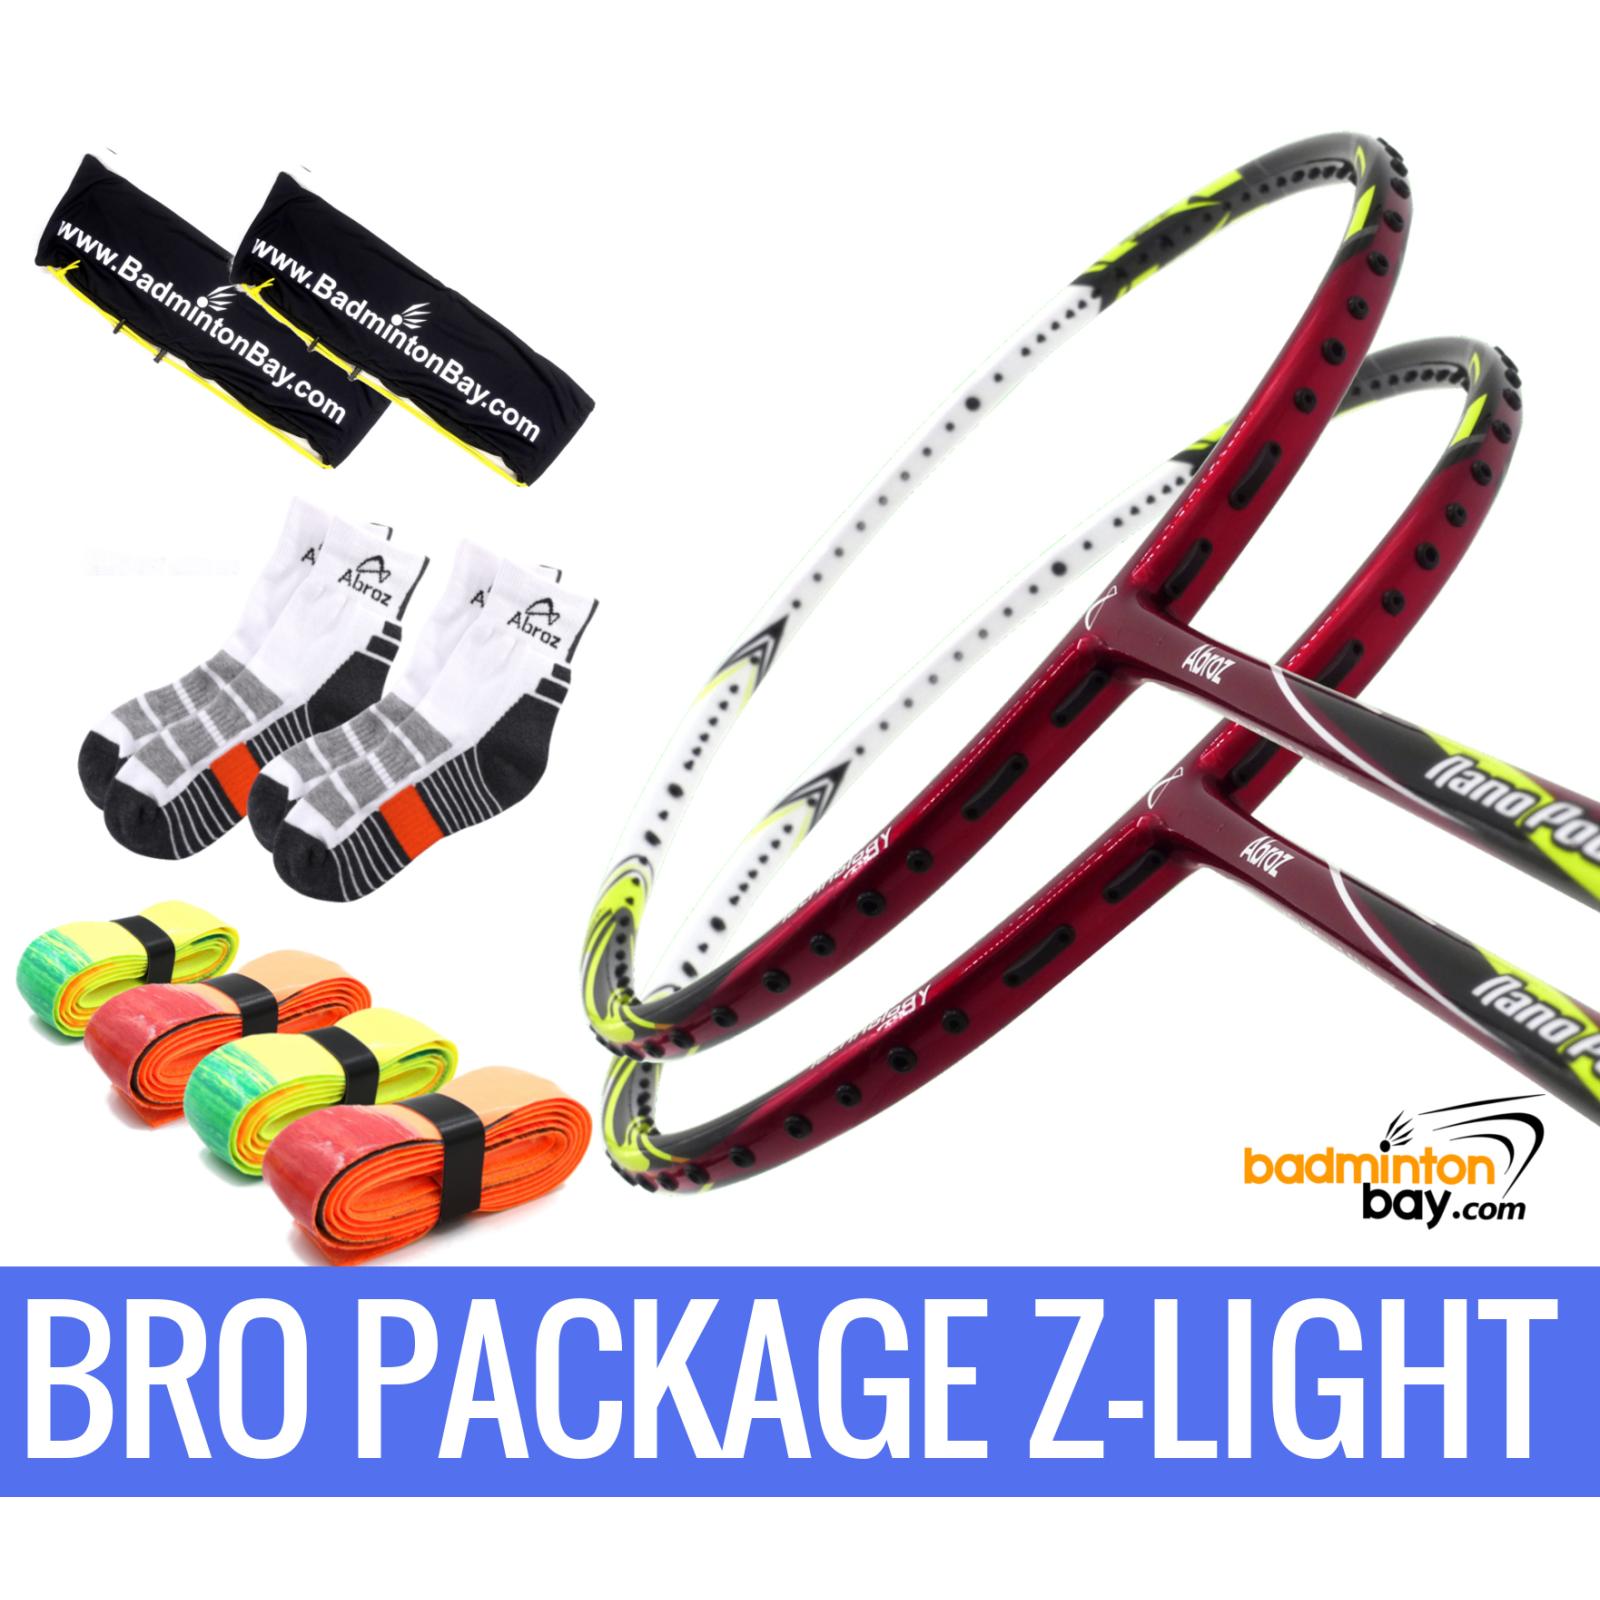 Bro Package Z-LIGHT: 2 pieces Abroz Nano Power Z-Light 6U Badminton Racket  + 4 pieces Abroz PU Grips + 2 Fabric covers + 2 pairs socks